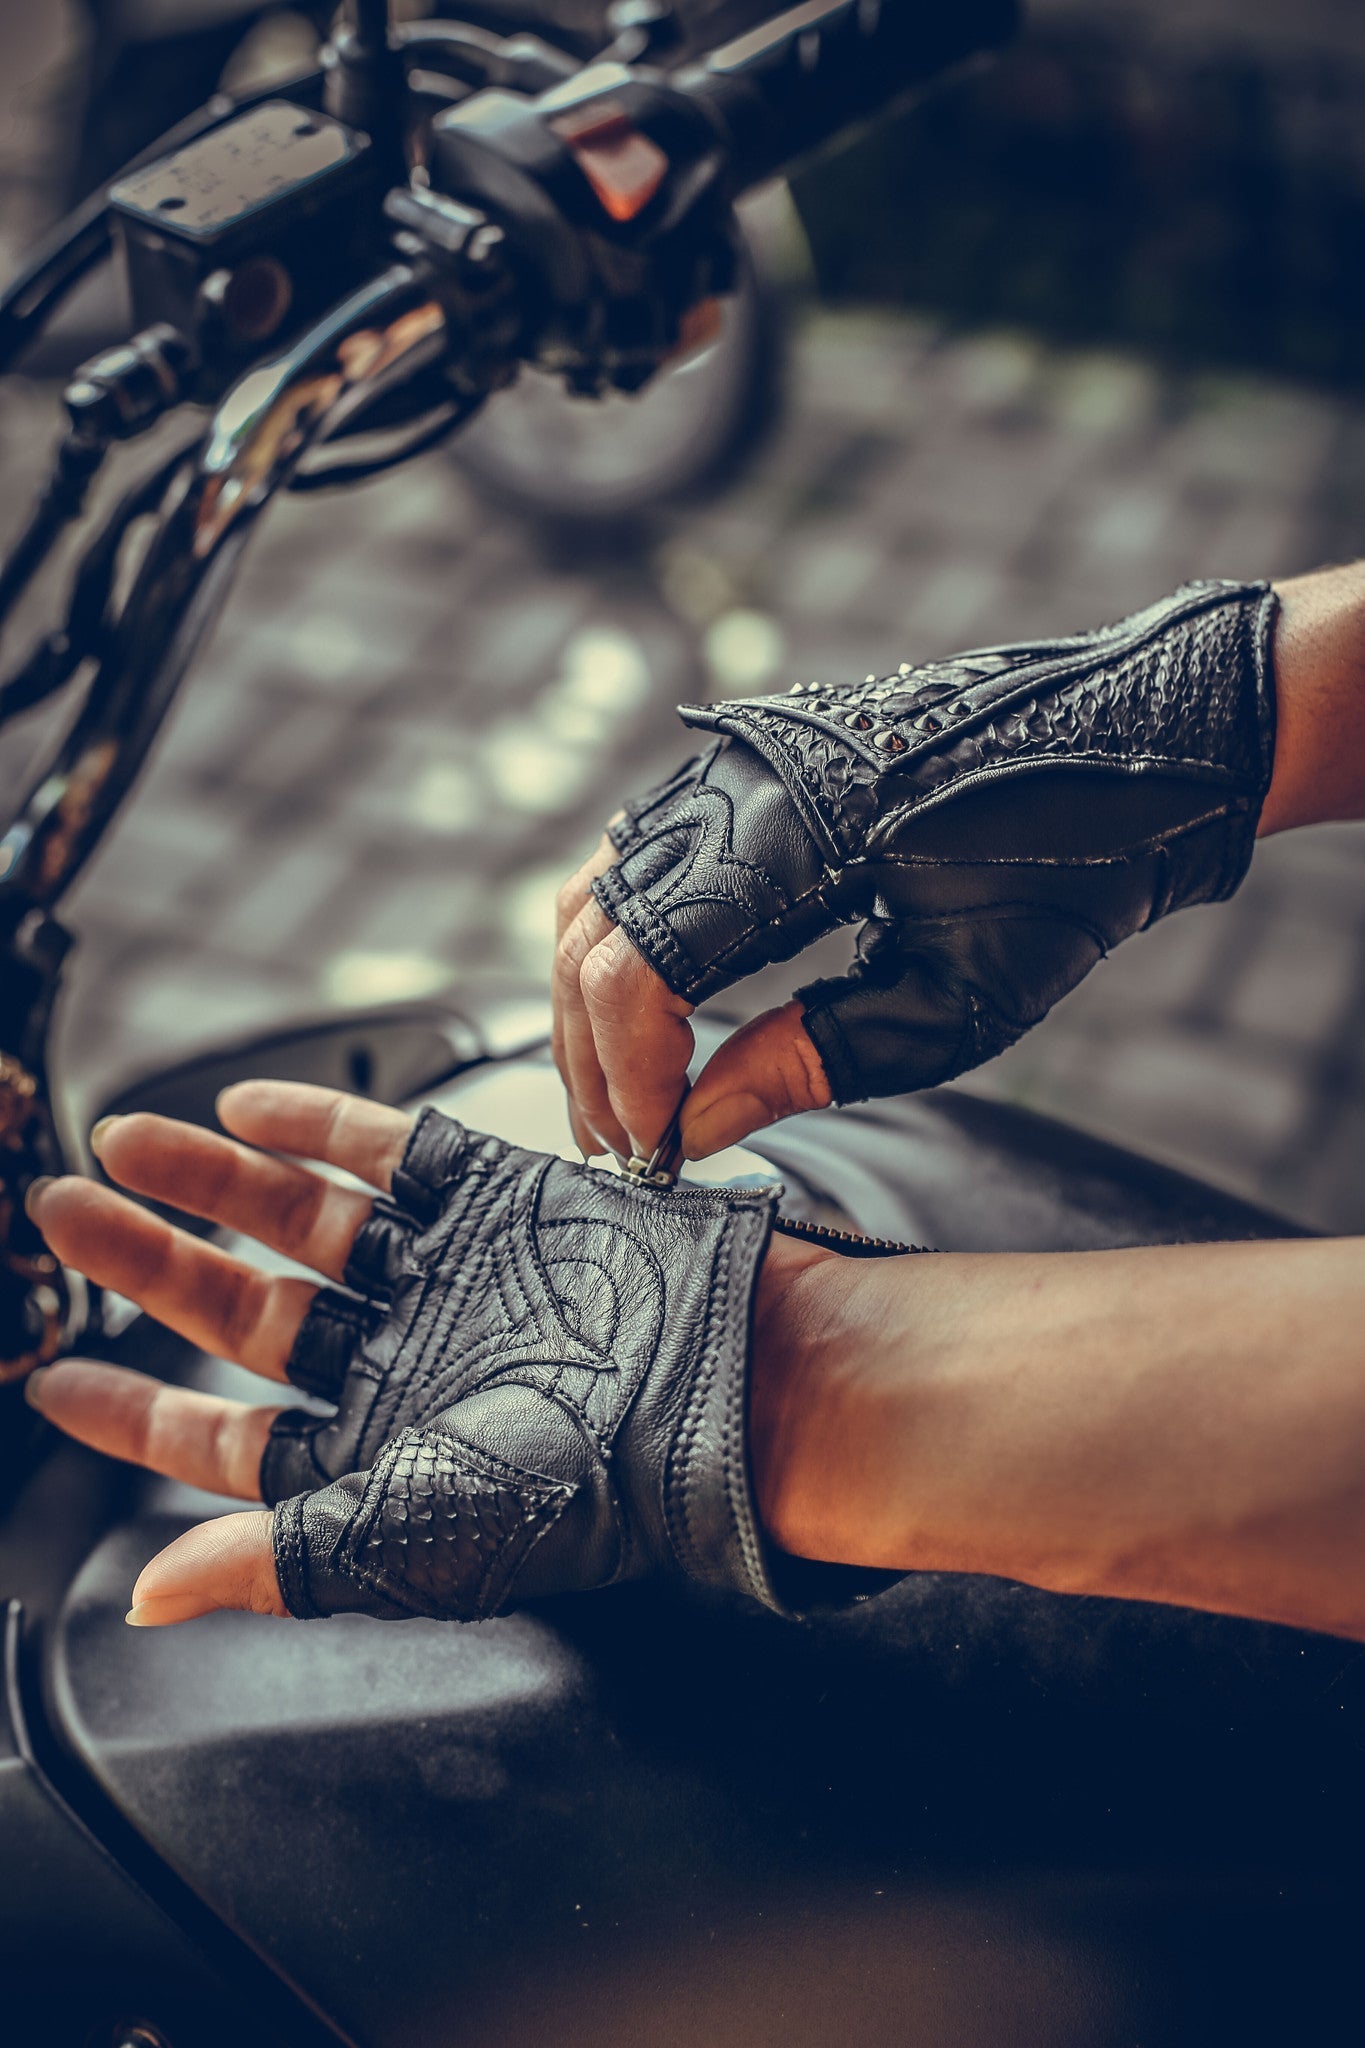 DragonScale gloves - anahata designs fingerless leather gloves